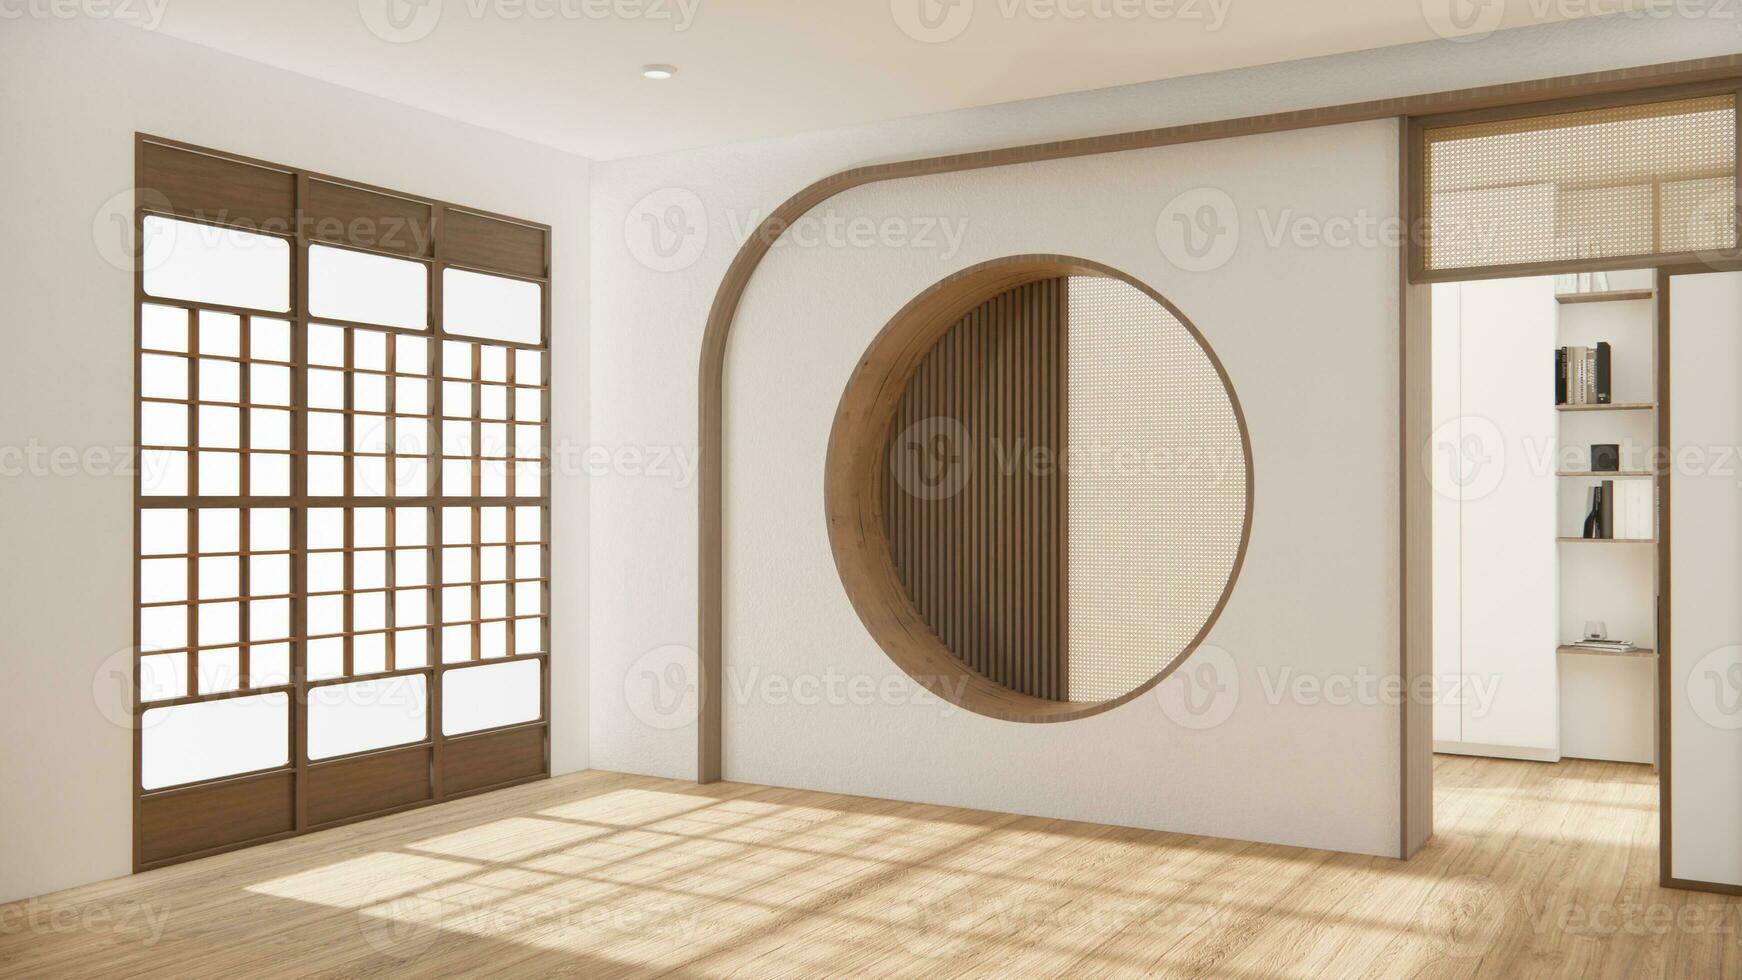 slaapkamer Japans minimaal stijl, modern wit muur en houten vloer, kamer minimalistisch. 3d renderen foto